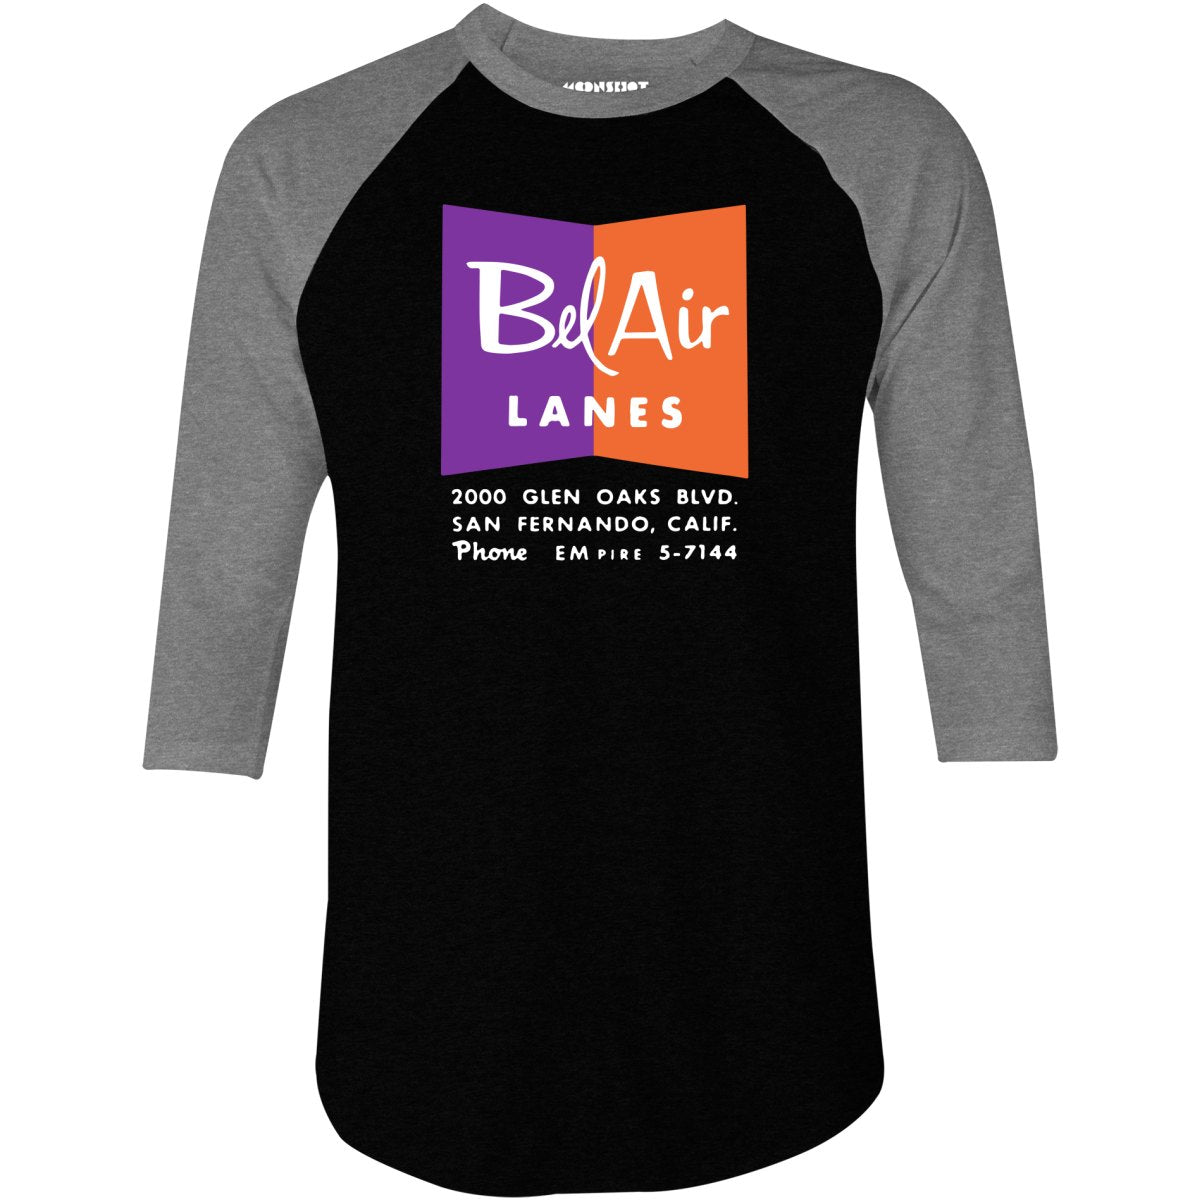 Bel Air Lanes - San Fernando, CA - Vintage Bowling Alley - 3/4 Sleeve Raglan T-Shirt